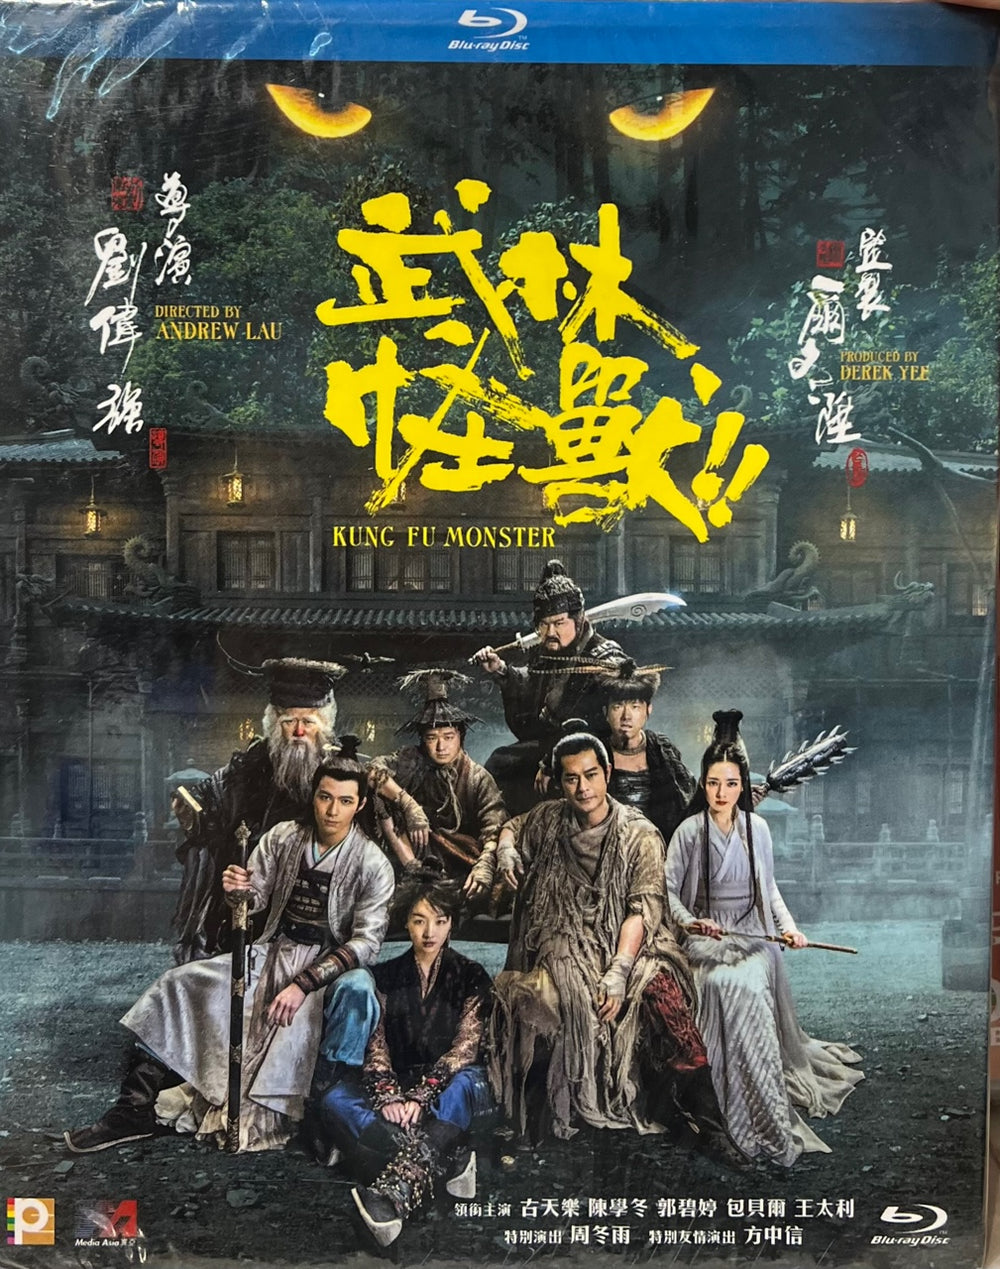 Kung Fu Monster 武林怪獸 2018  (Hong Kong Movie) BLU-RAY with English Sub (Region A)